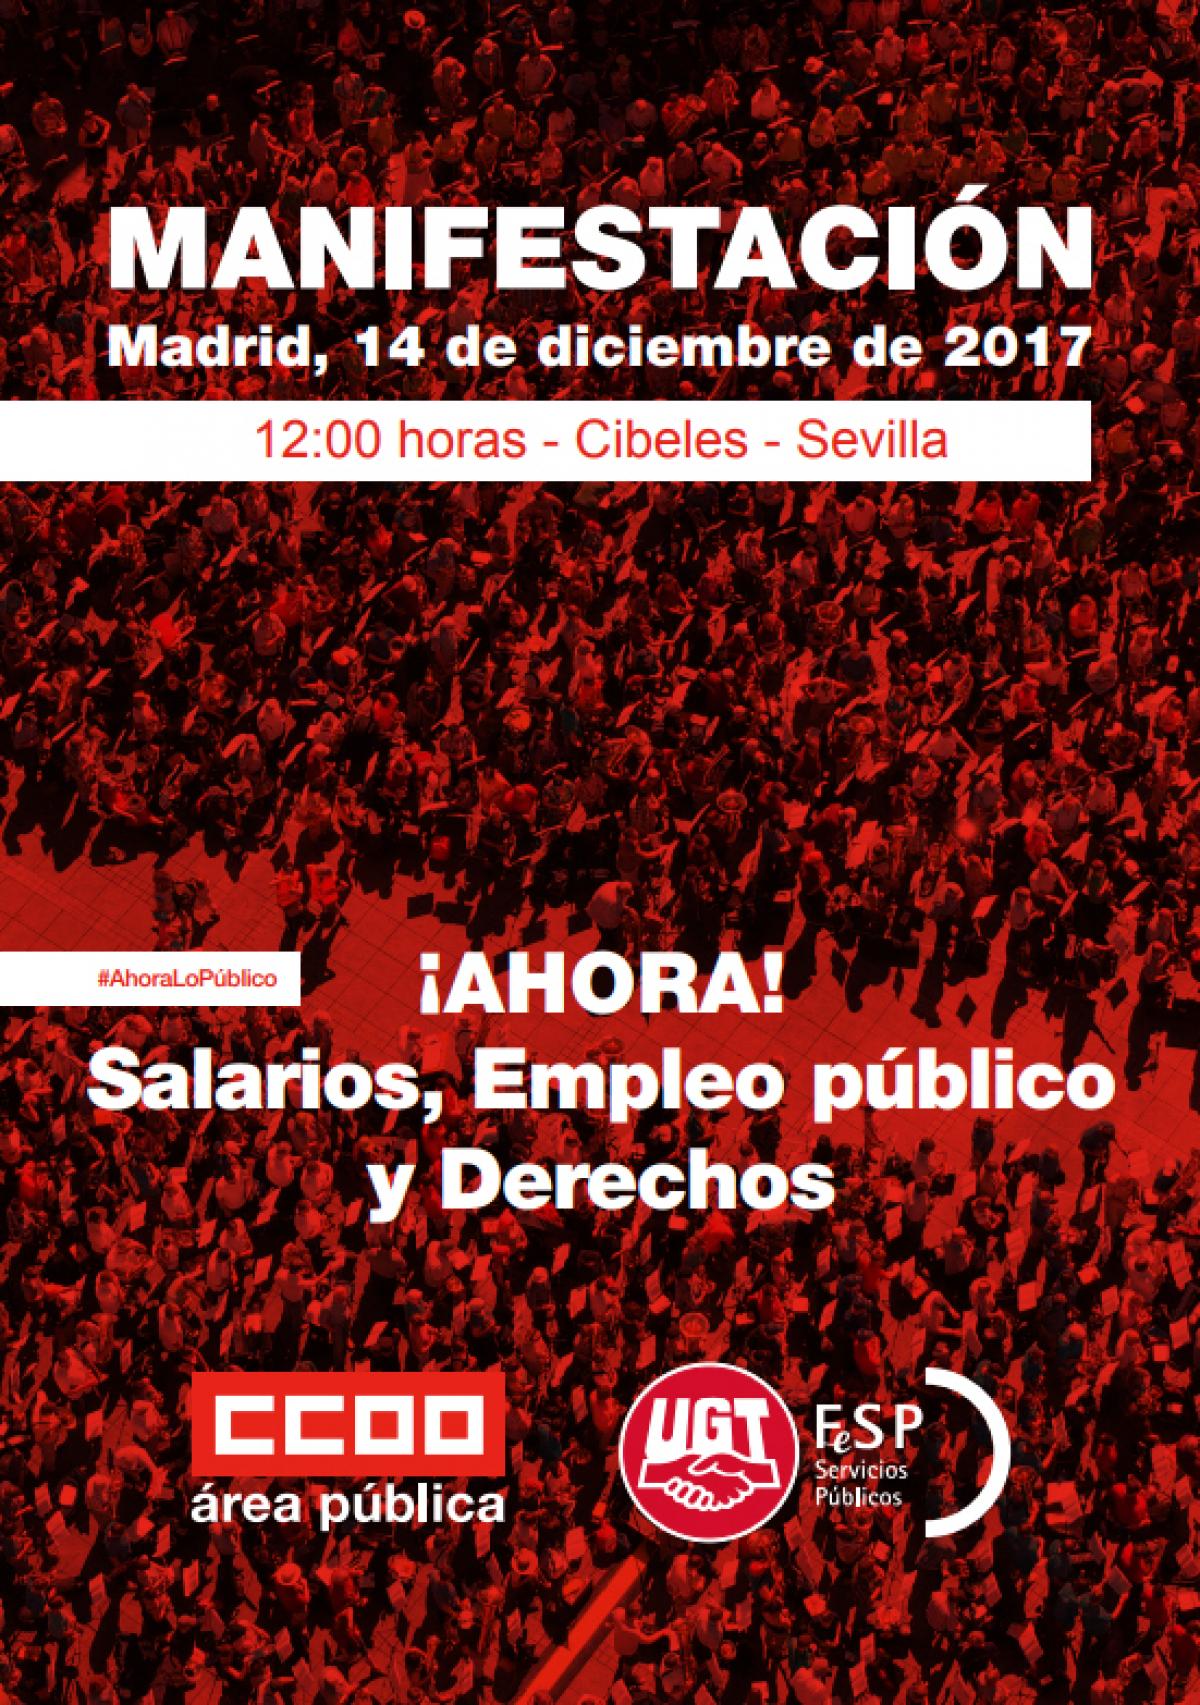 Manifestaci�n Ahoralopublico en Madrid